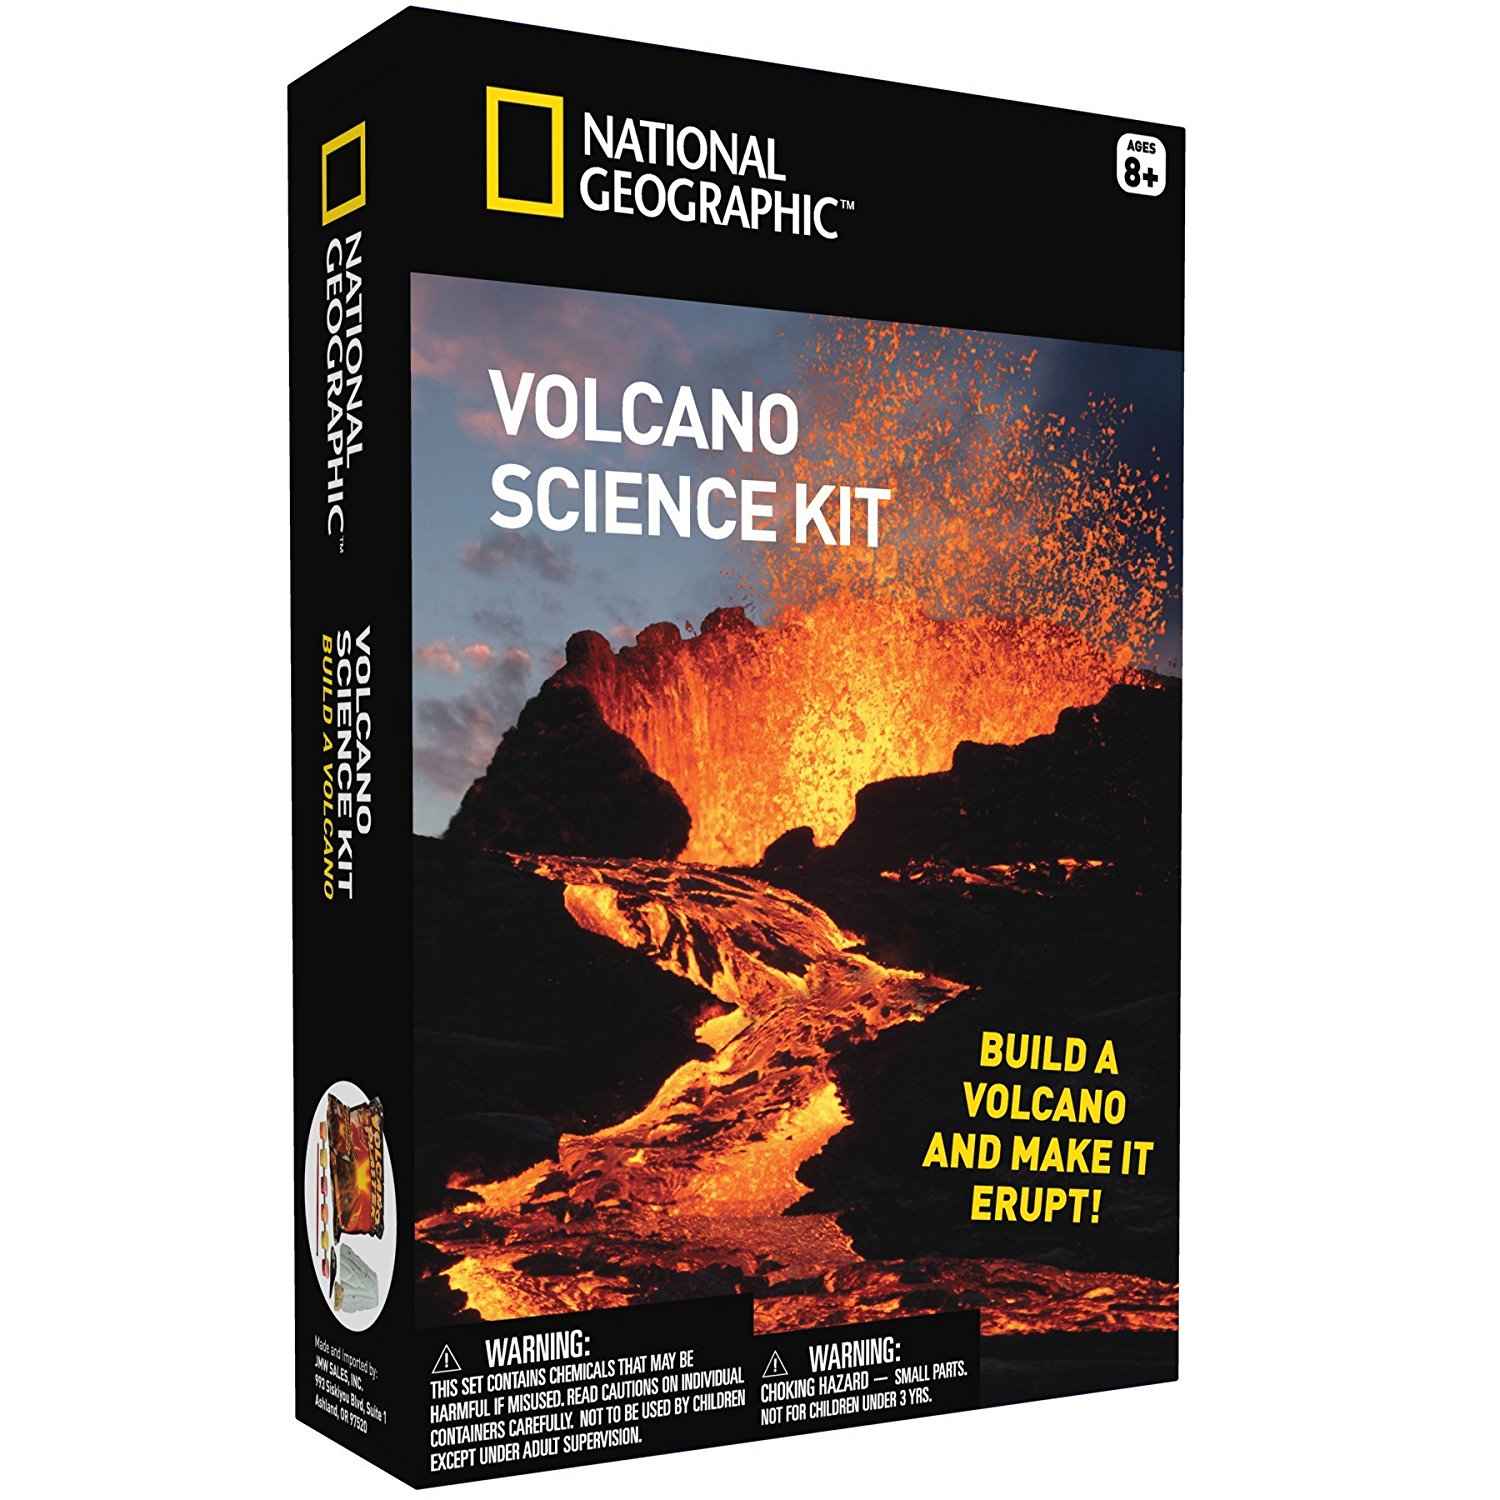 Build a Volcano and Make It Erupt